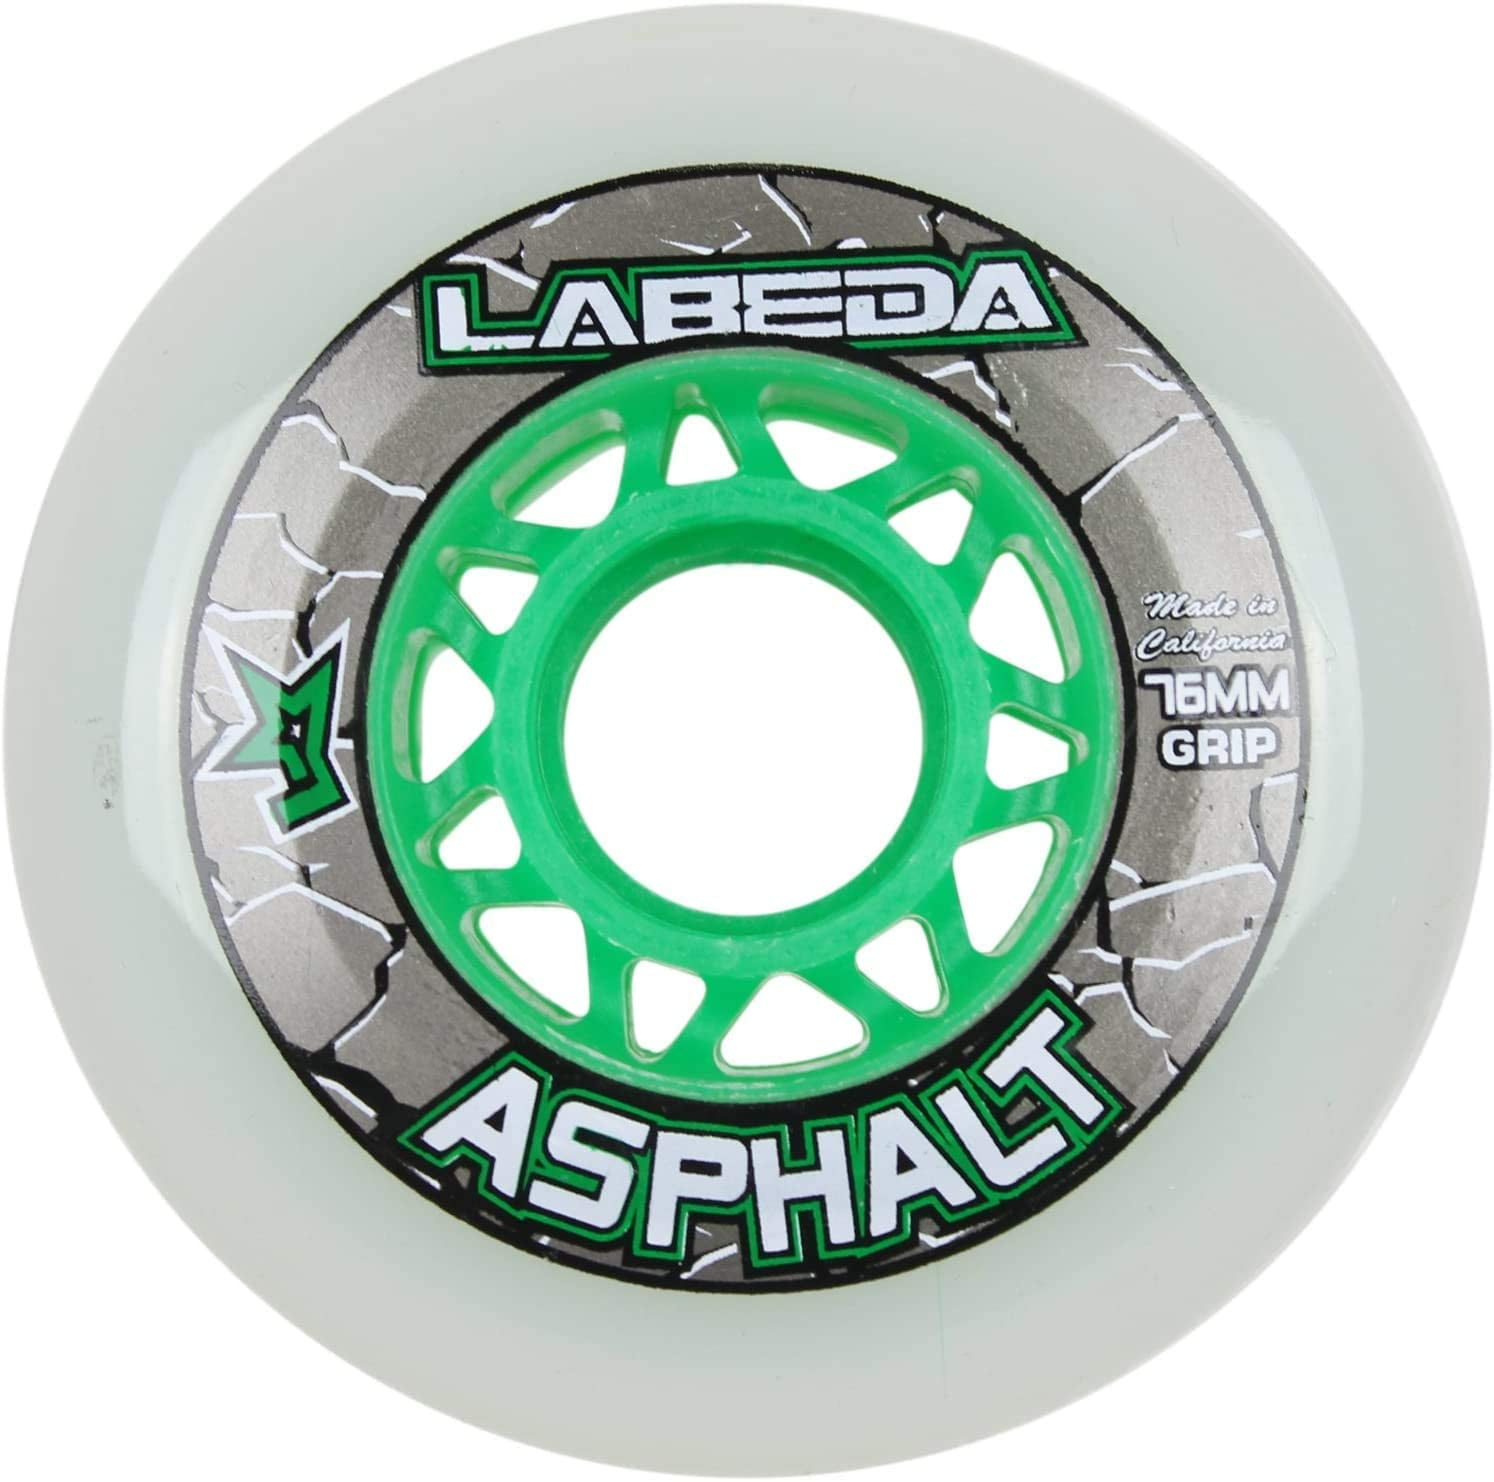 Labeda Asphalt Inline Roller Hockey Wheels 80mm White 83A 8-Pack Bones Reds 